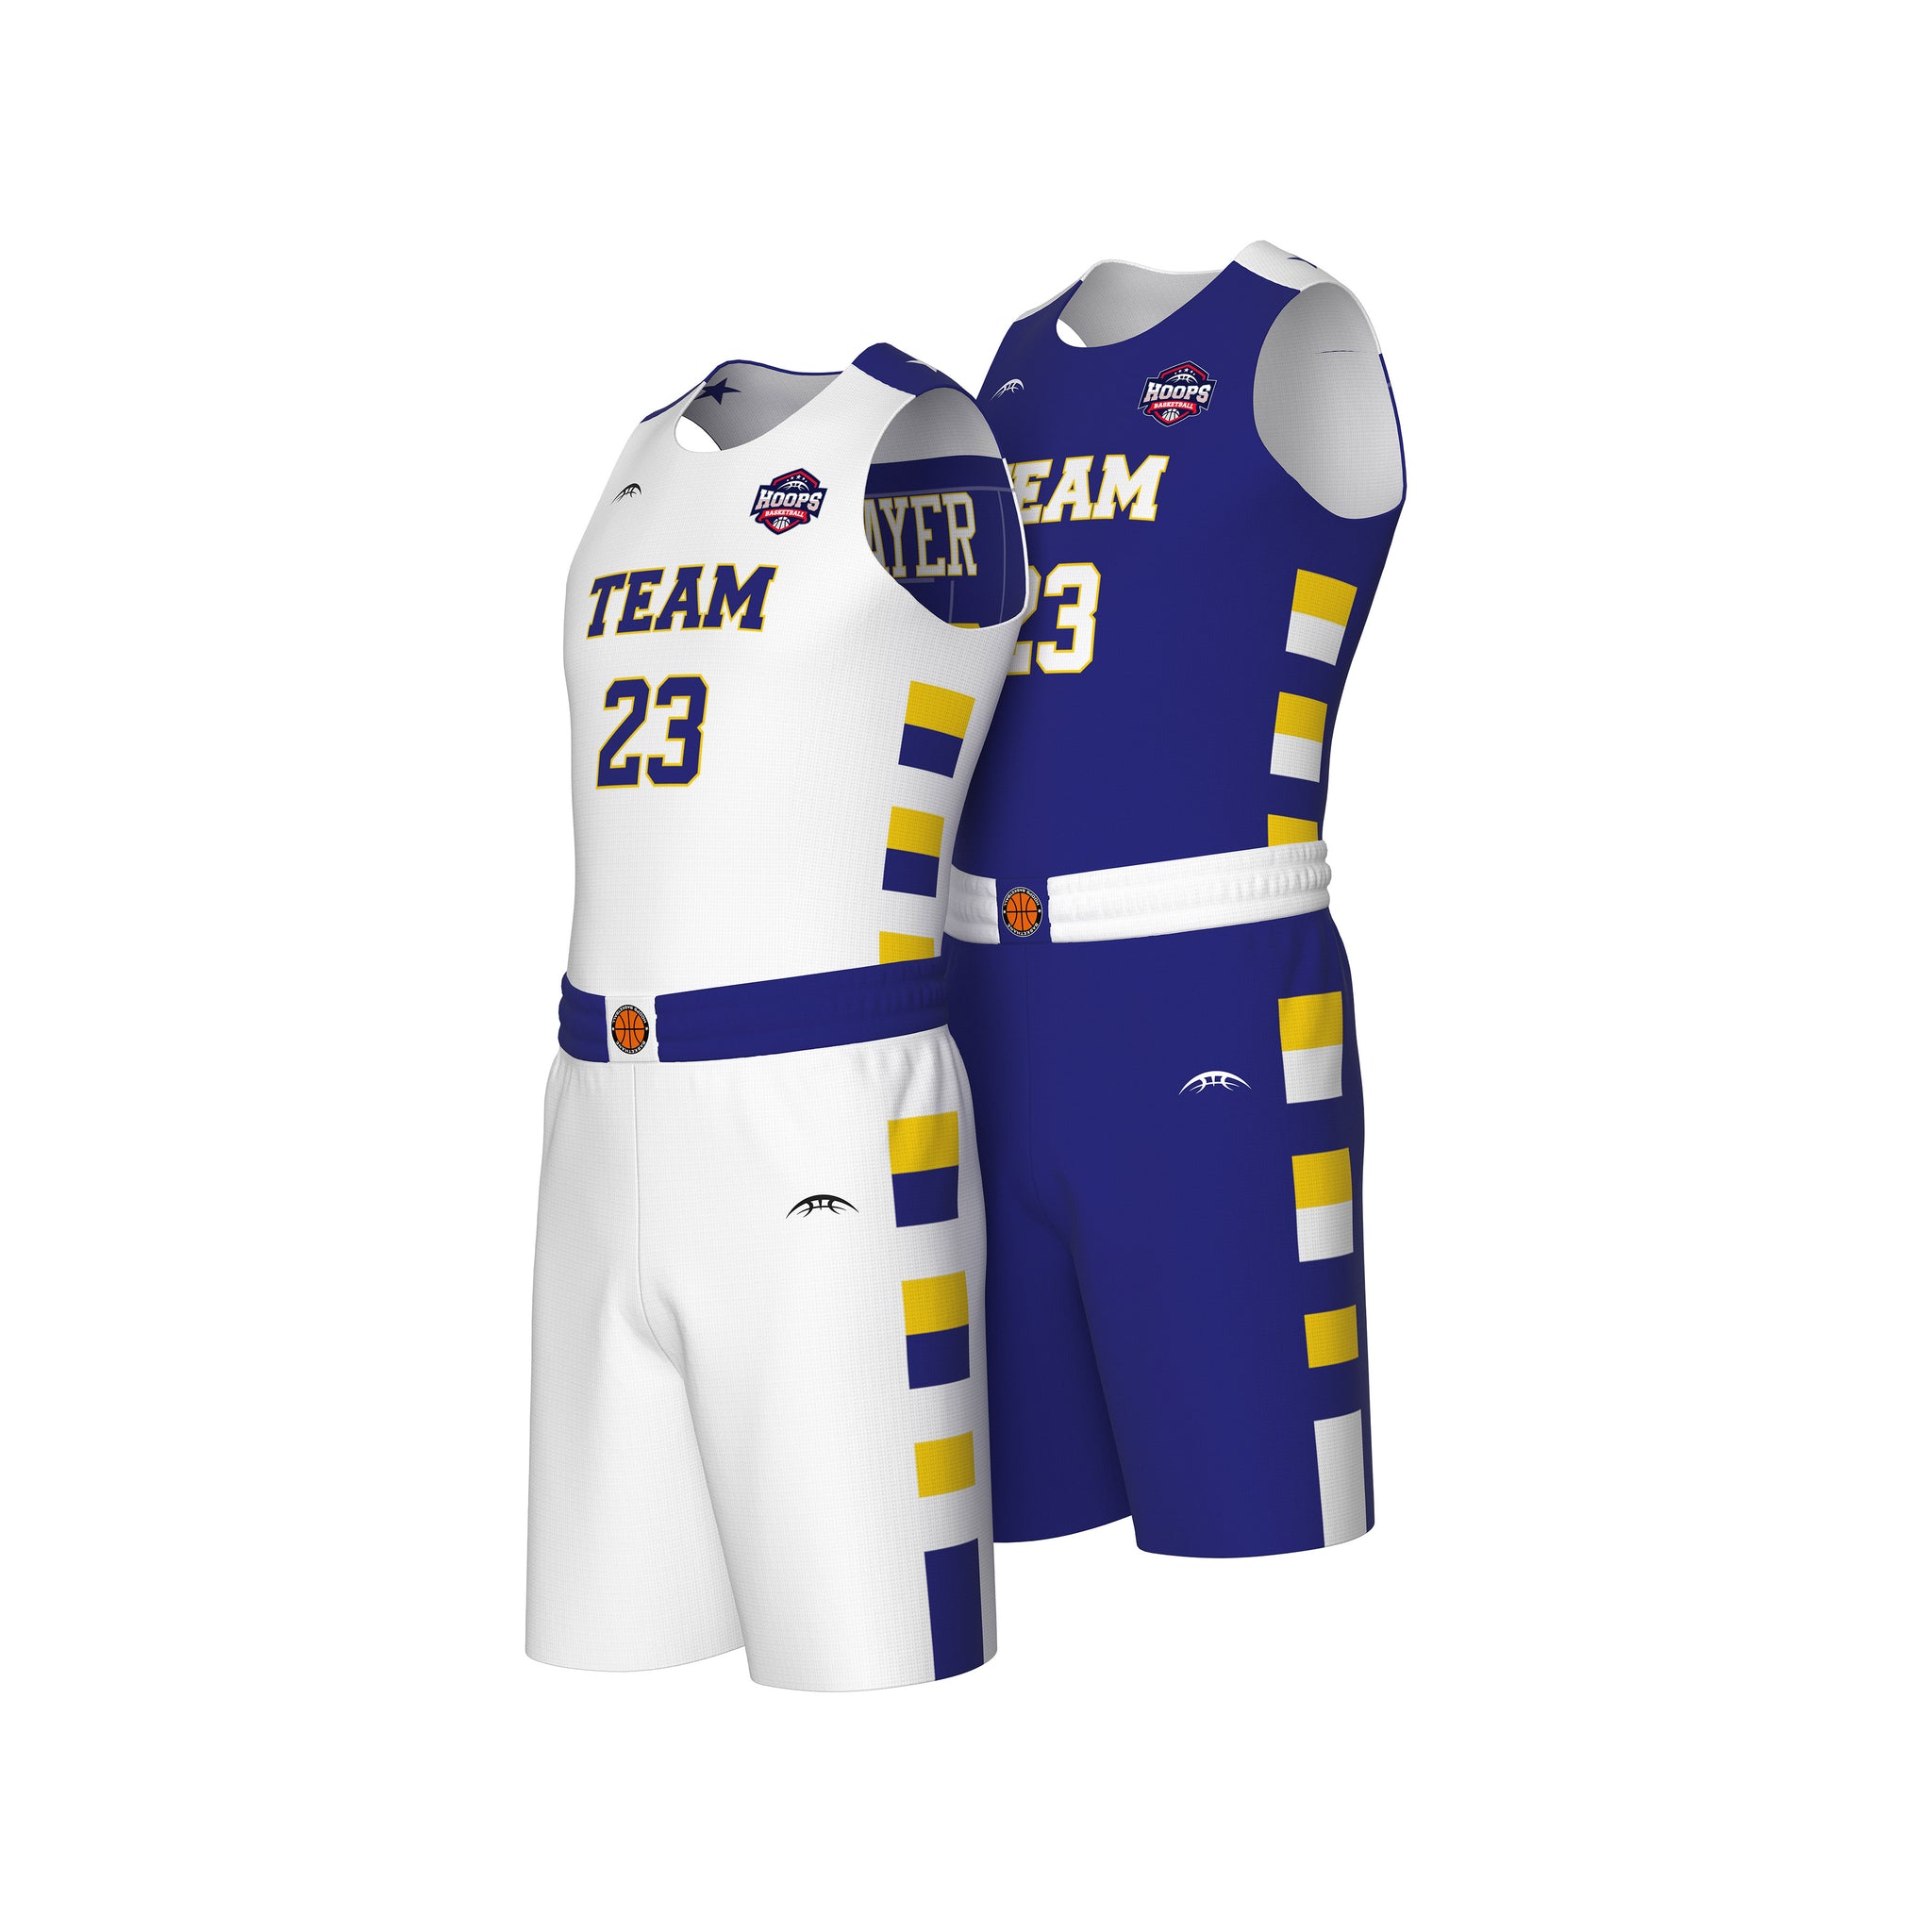 Custom All-Star Reversible Basketball Uniform  - 145 Eagle